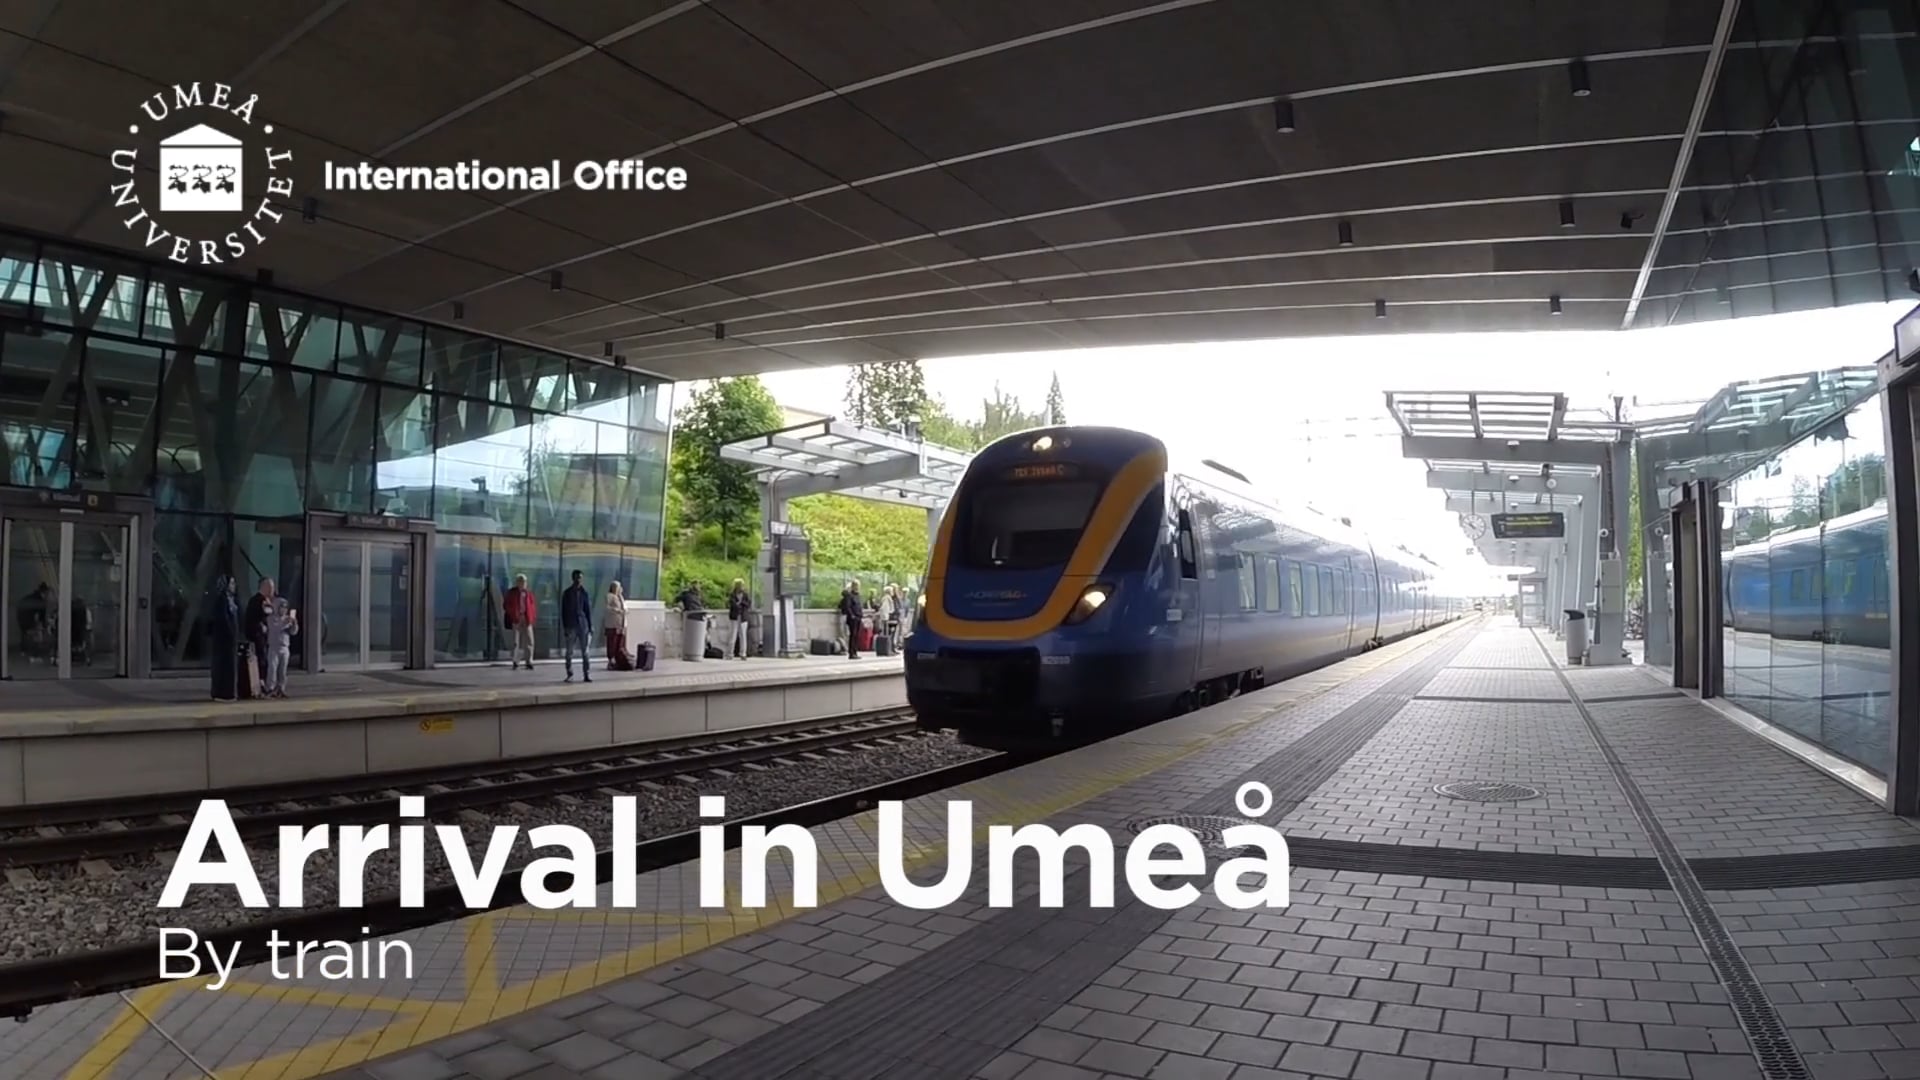 Film: Arriving in Umeå by train